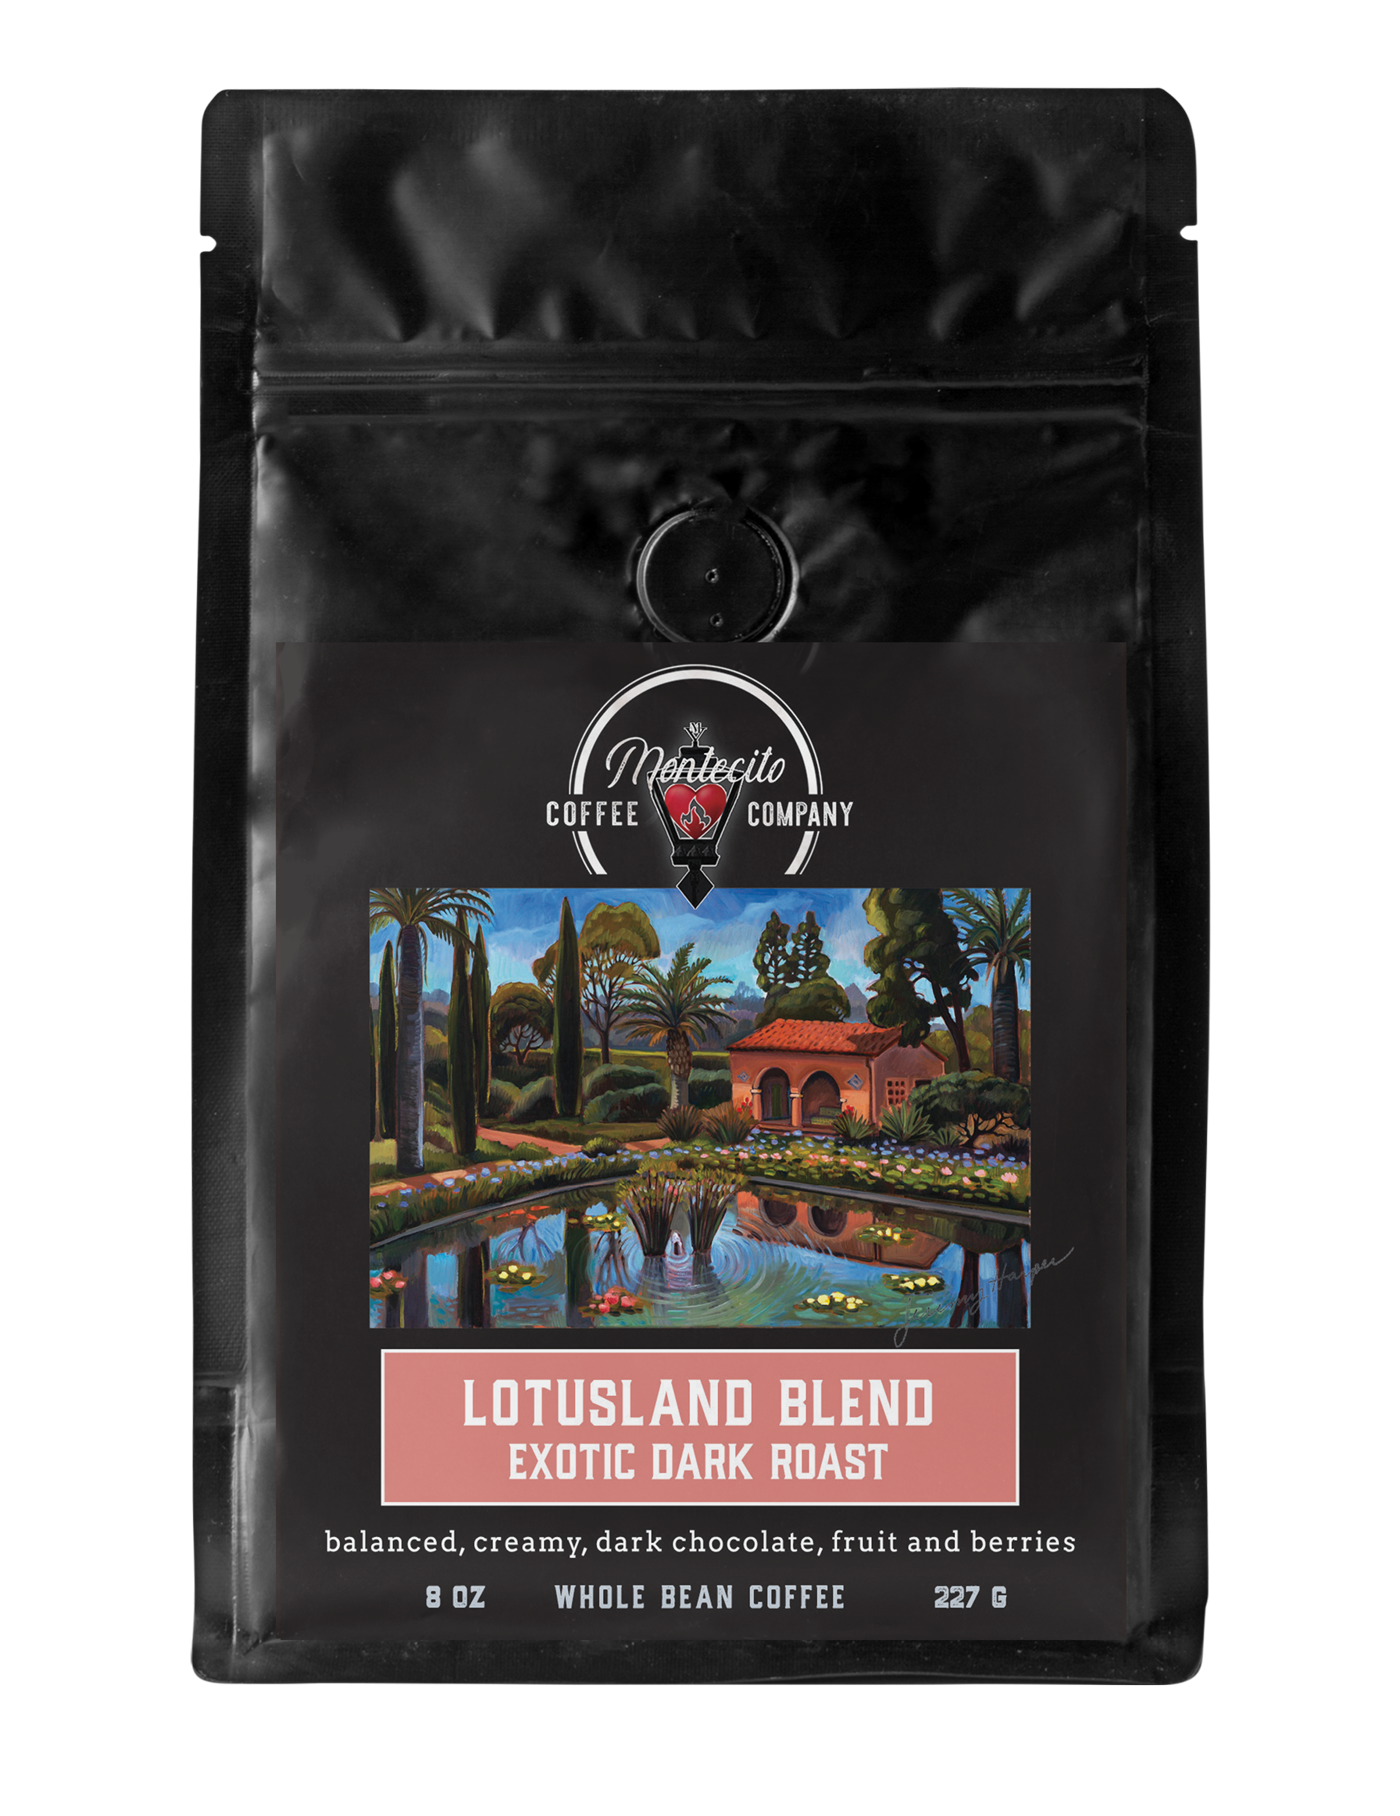 LOTUSLAND BLEND Exotic Dark Roast Coffee